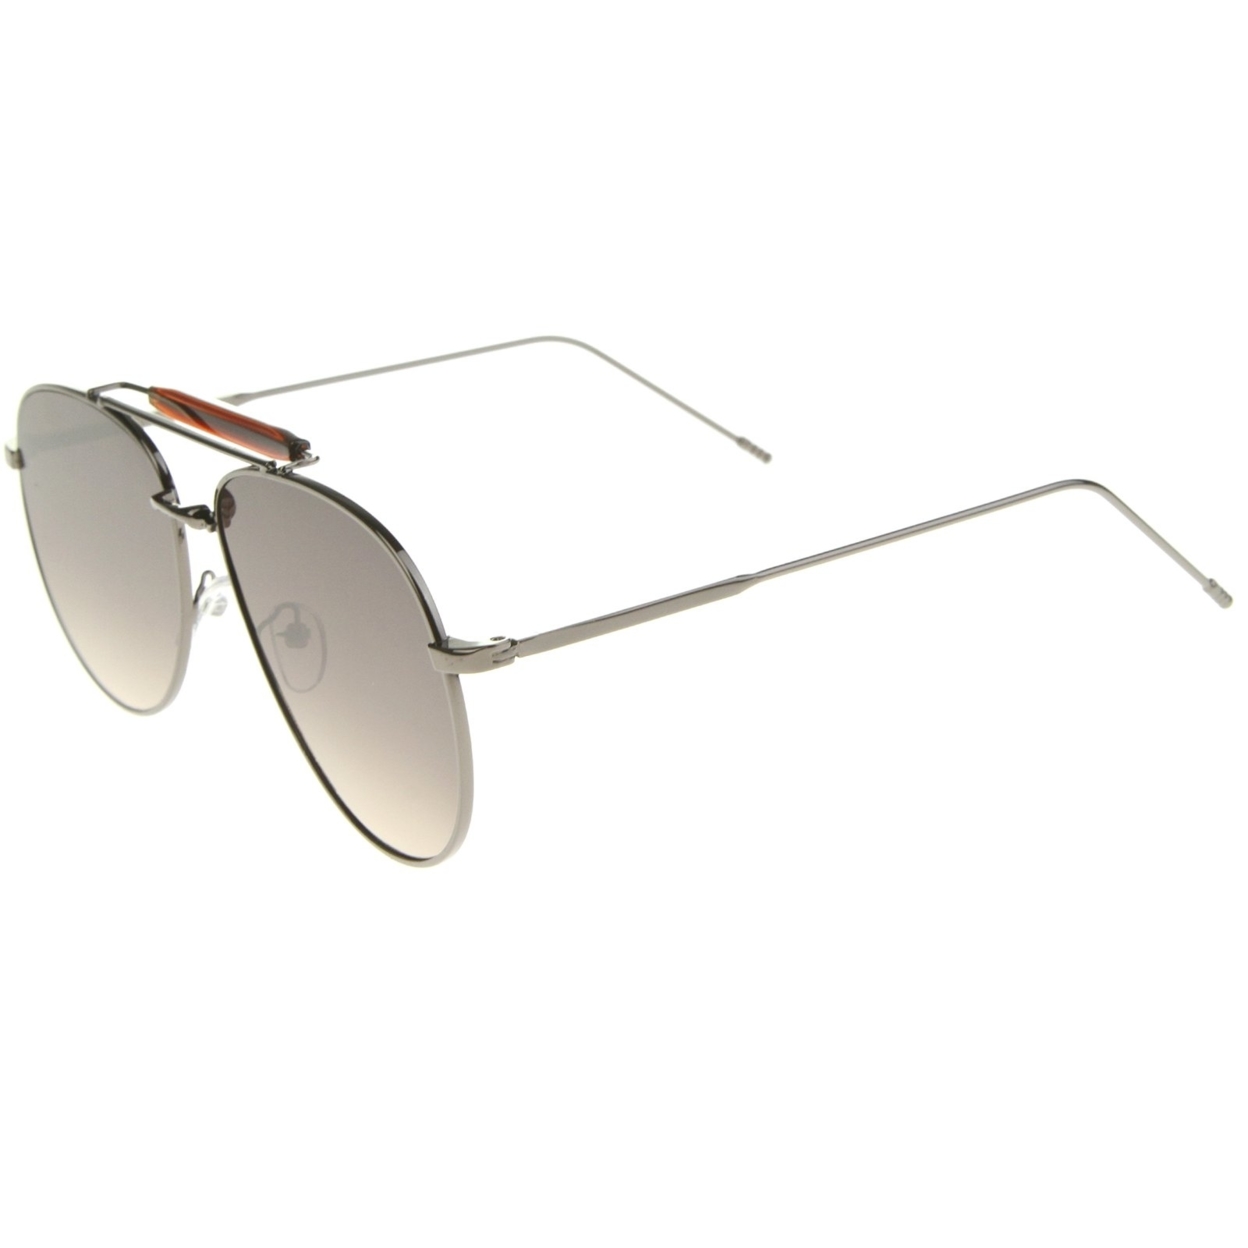 Classic Retro Metal Wire Teardrop Flat Lens Crossbar Aviator Sunglasses - Gunmetal-Brown / Lavender